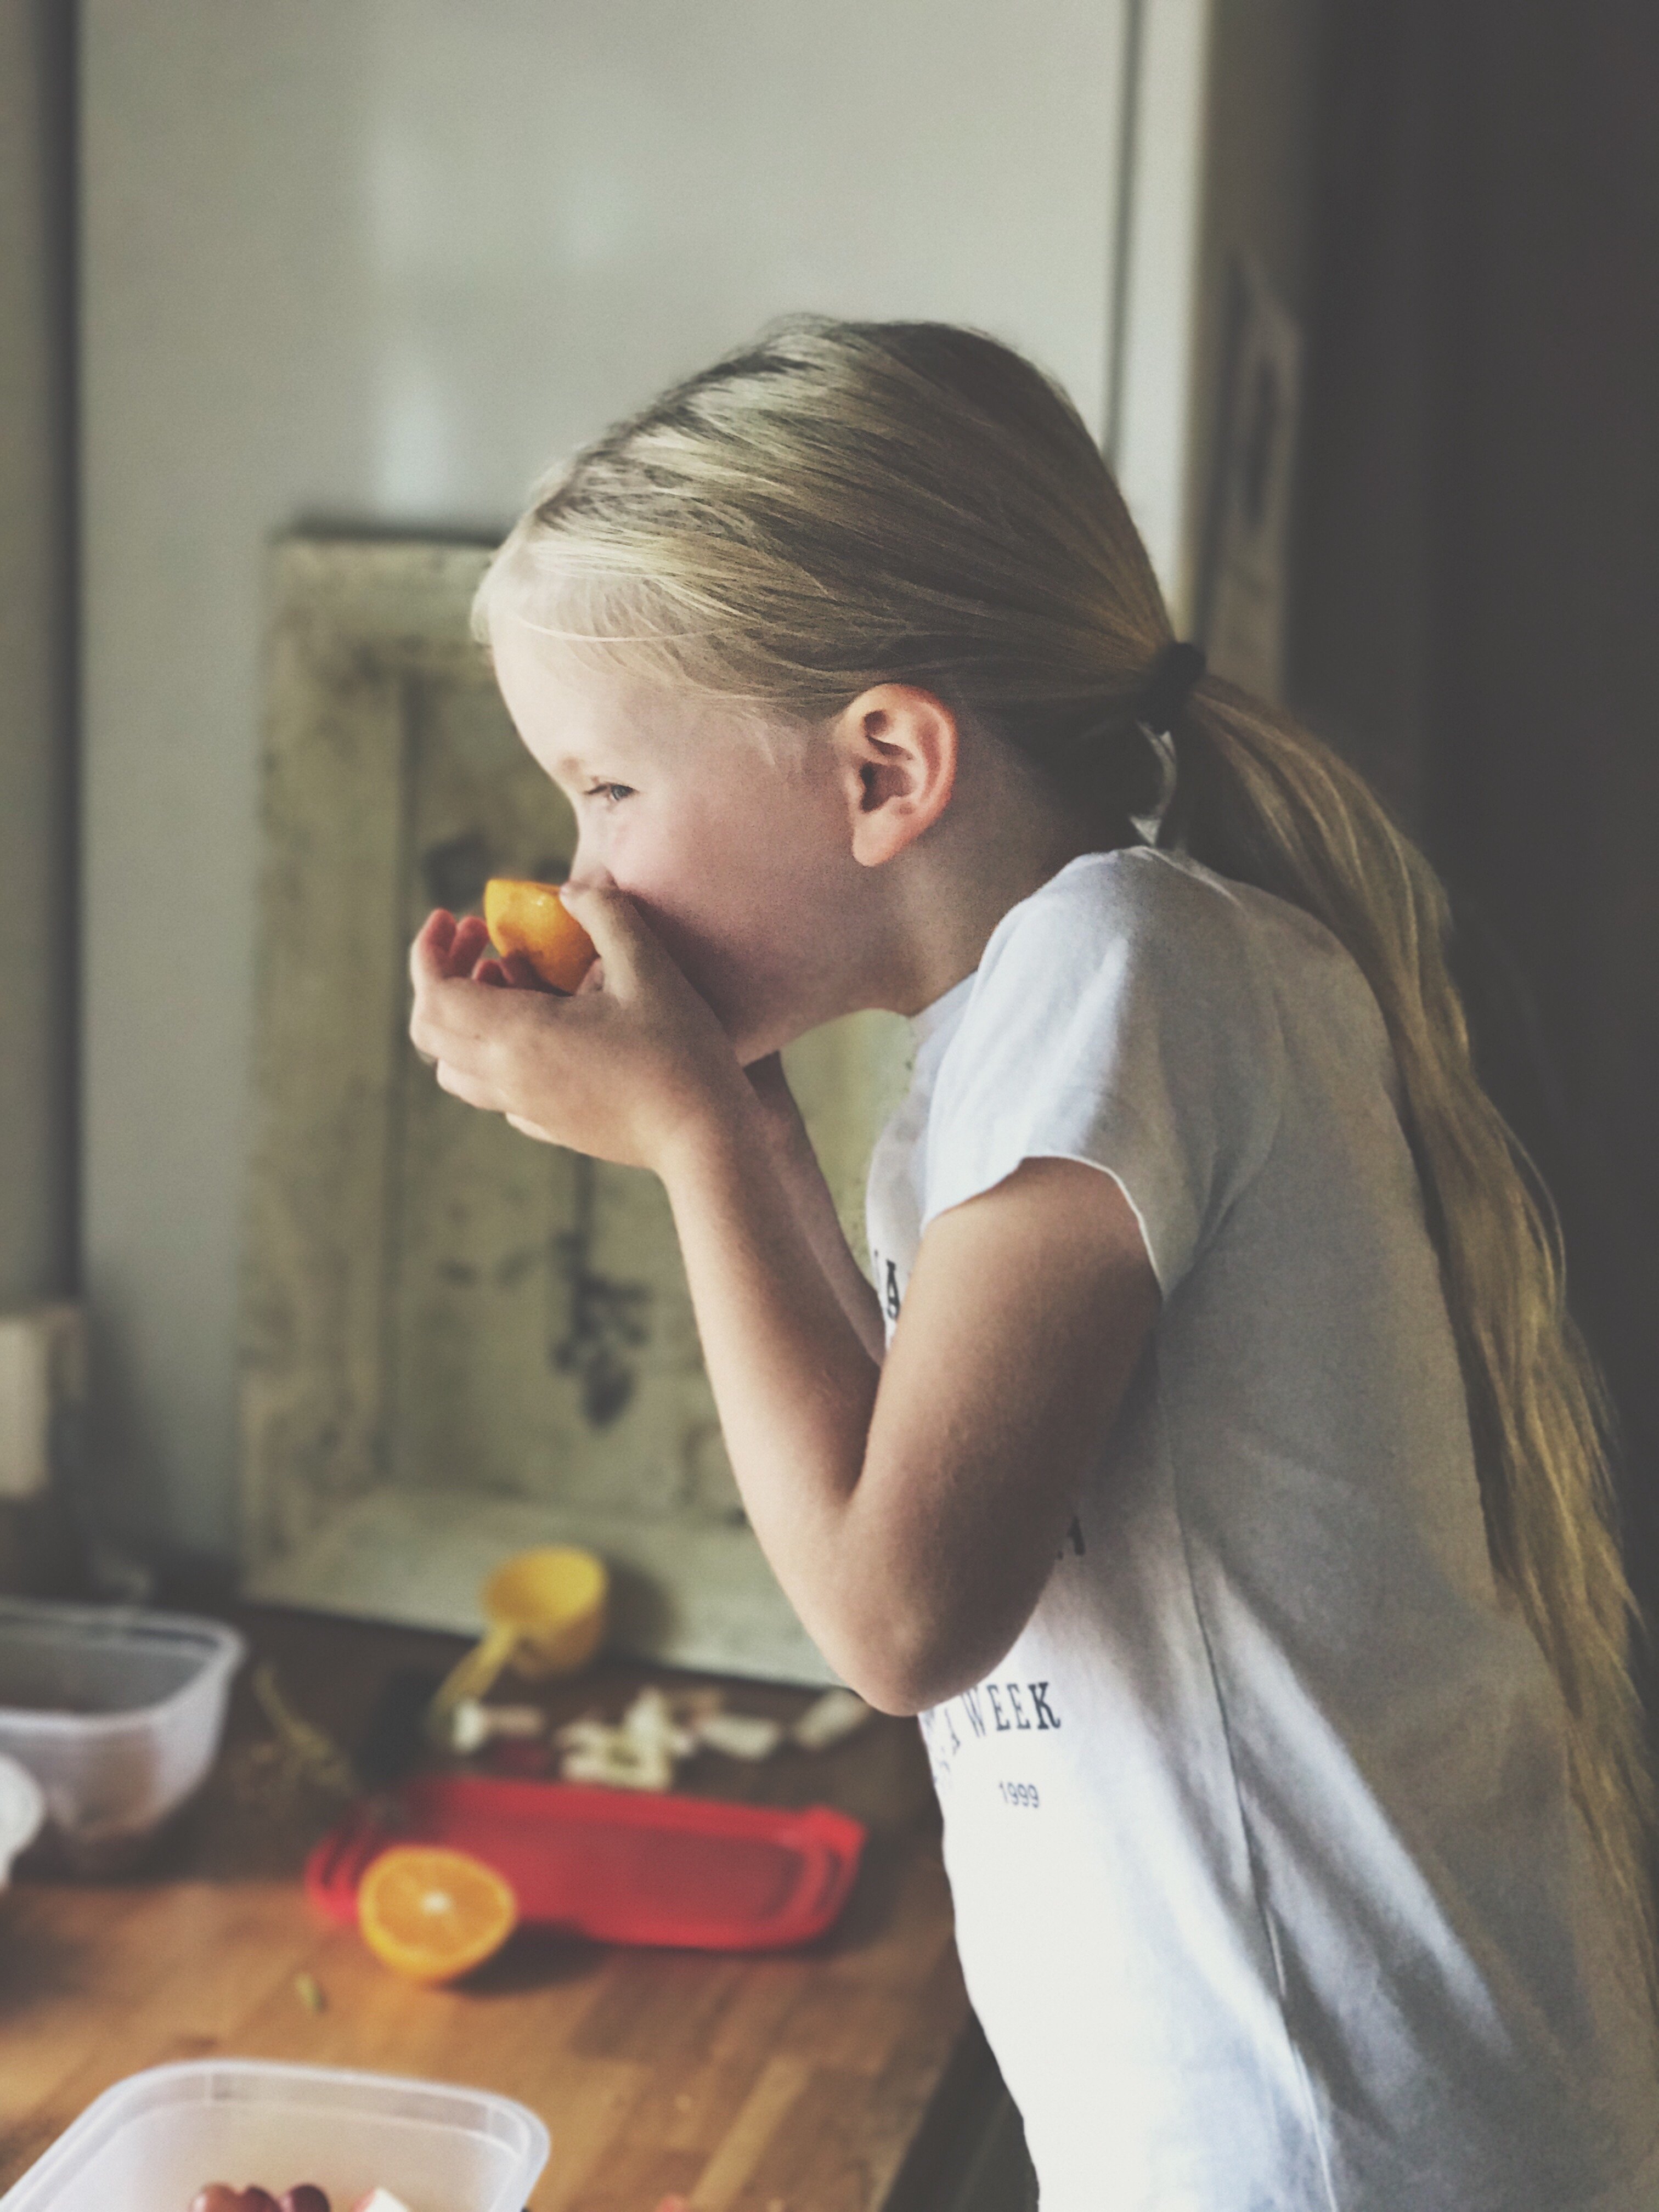 Criança comendo uma laranja na cozinha